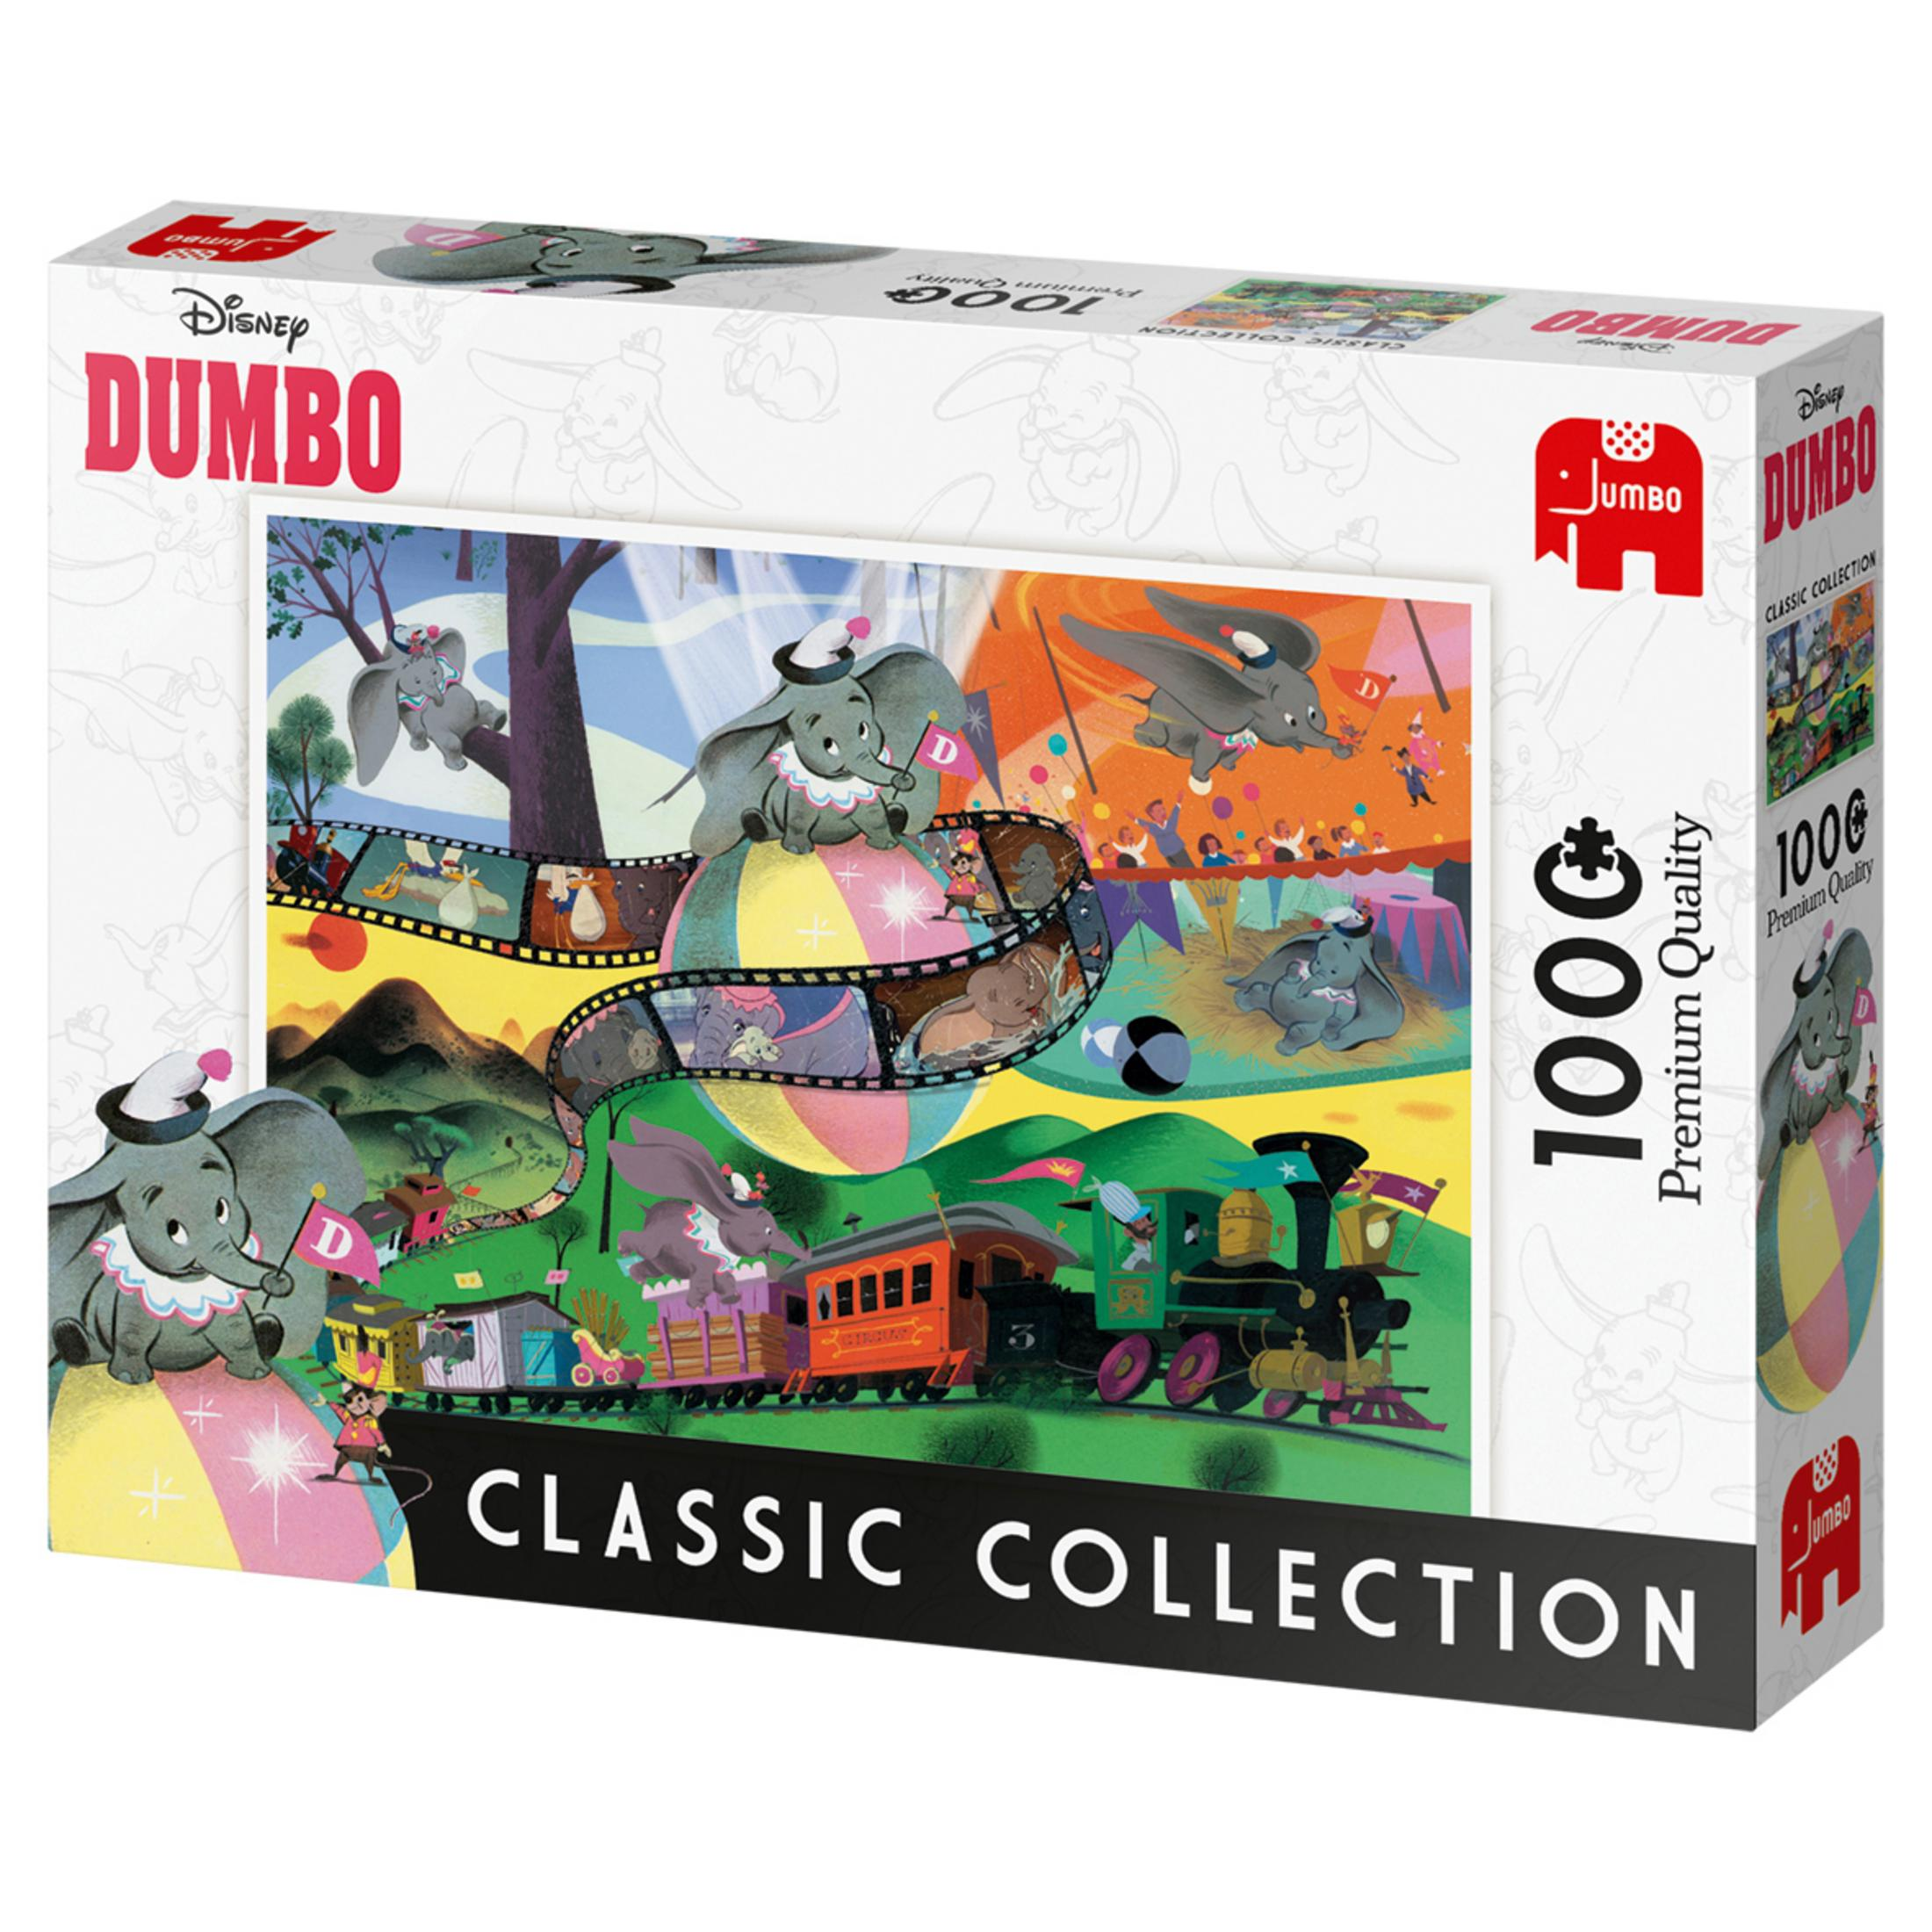 Puzzle CLASSIC 18824 TEILE JUMBO DUMBO DISNEY - COLLECTION 1000